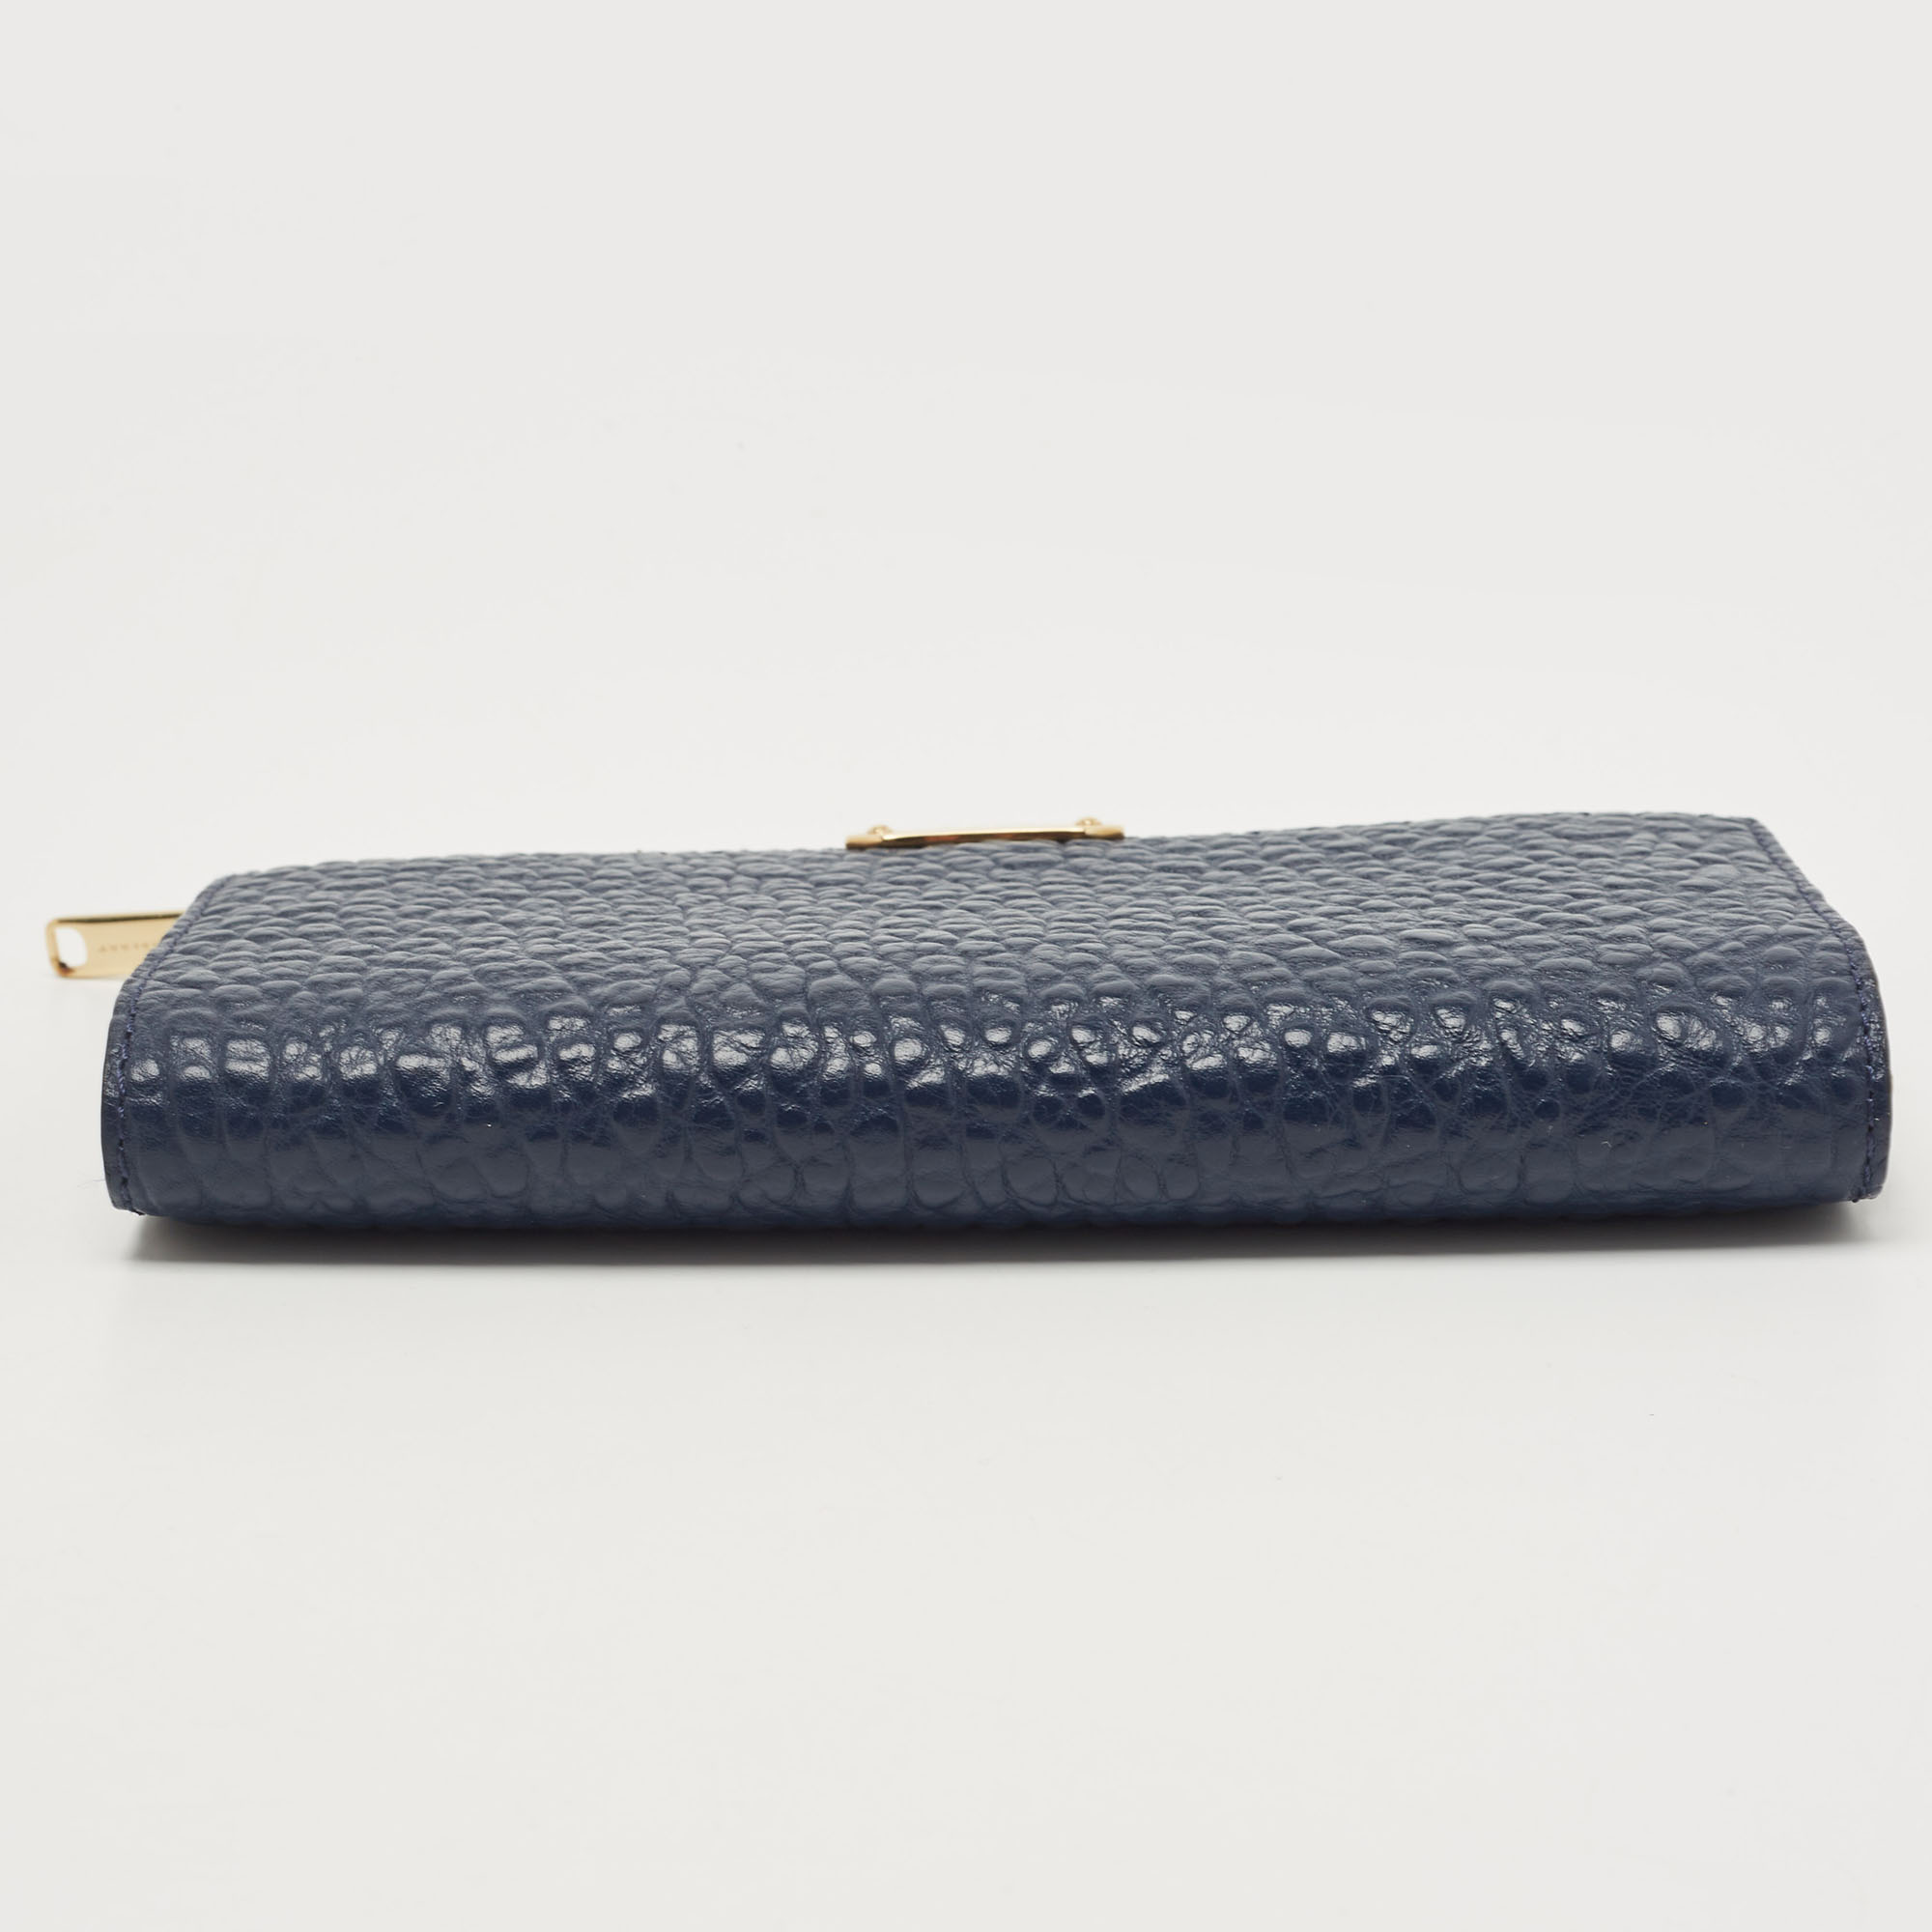 Burberry Navy Blue Textured Leather Alvington Wallet